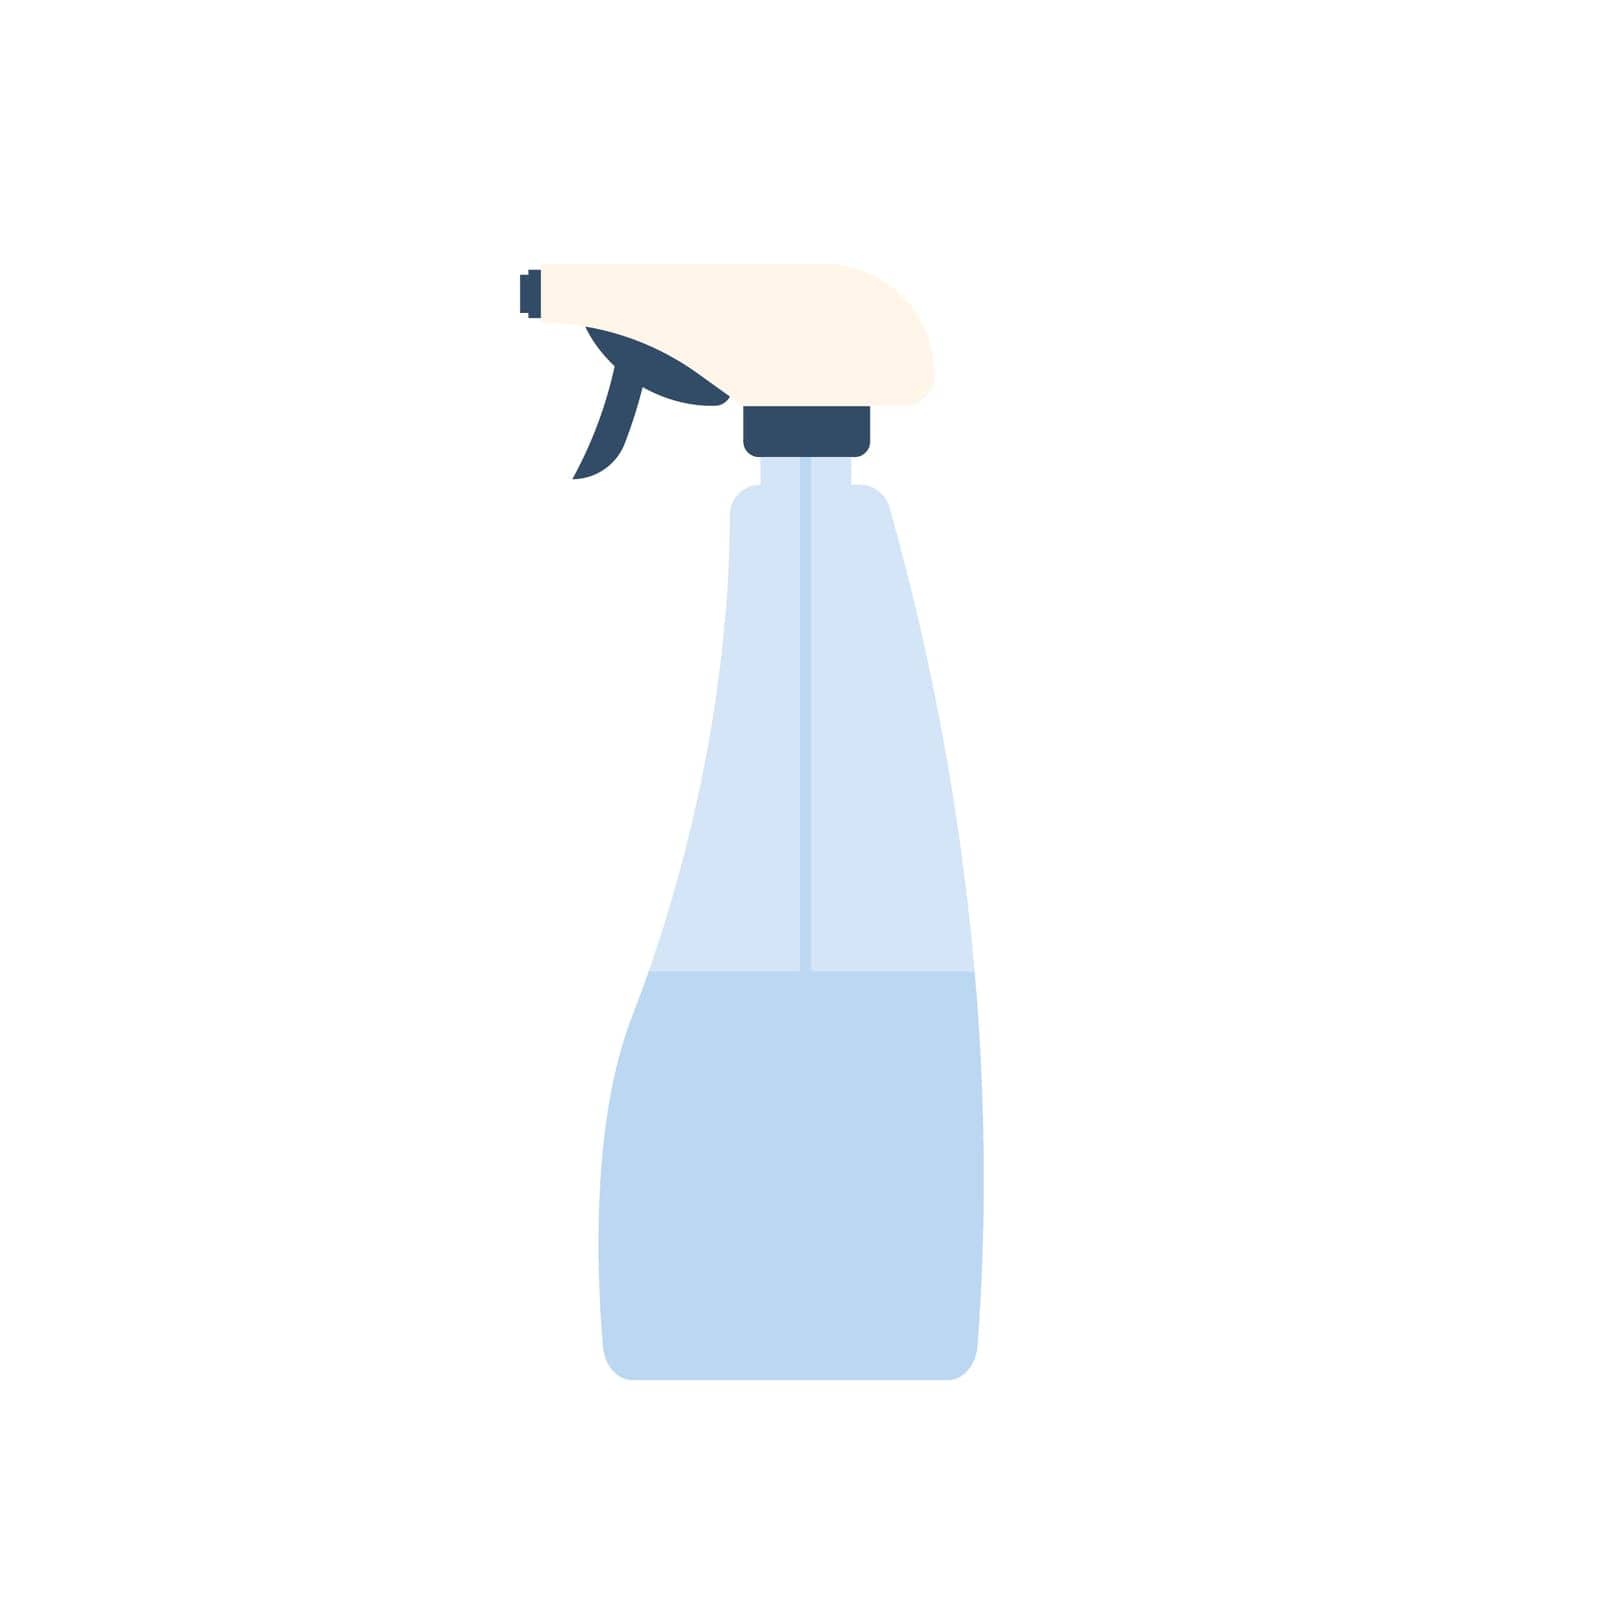 Cleaning windows spray bottle by Popov